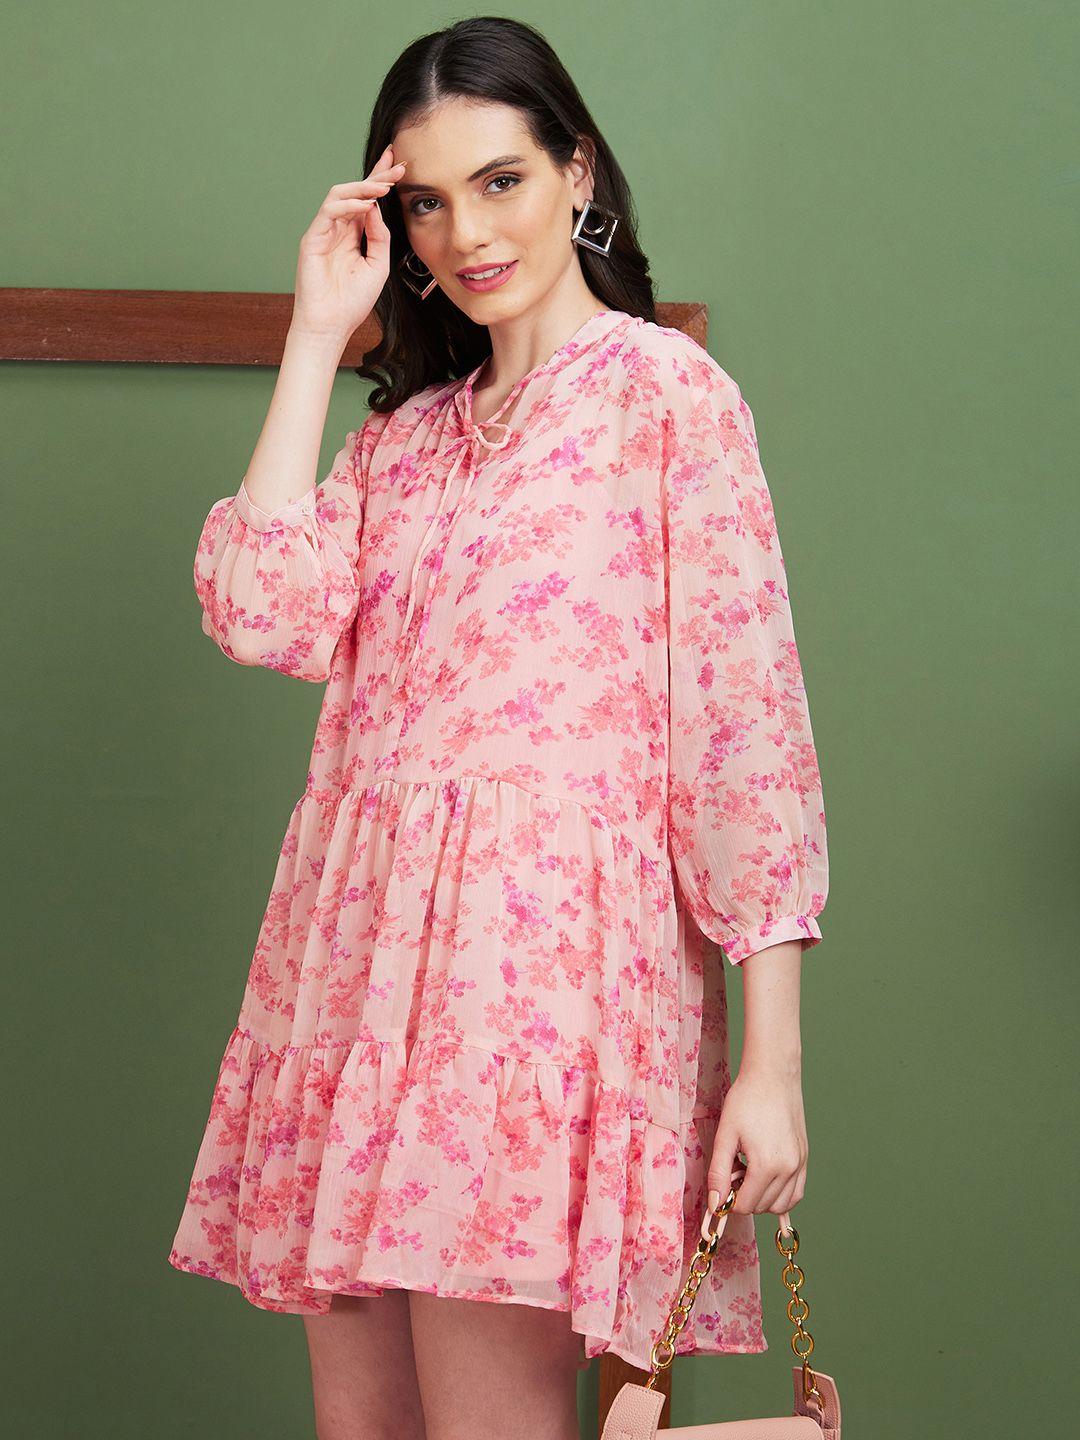 globus pink floral print georgette a-line dress